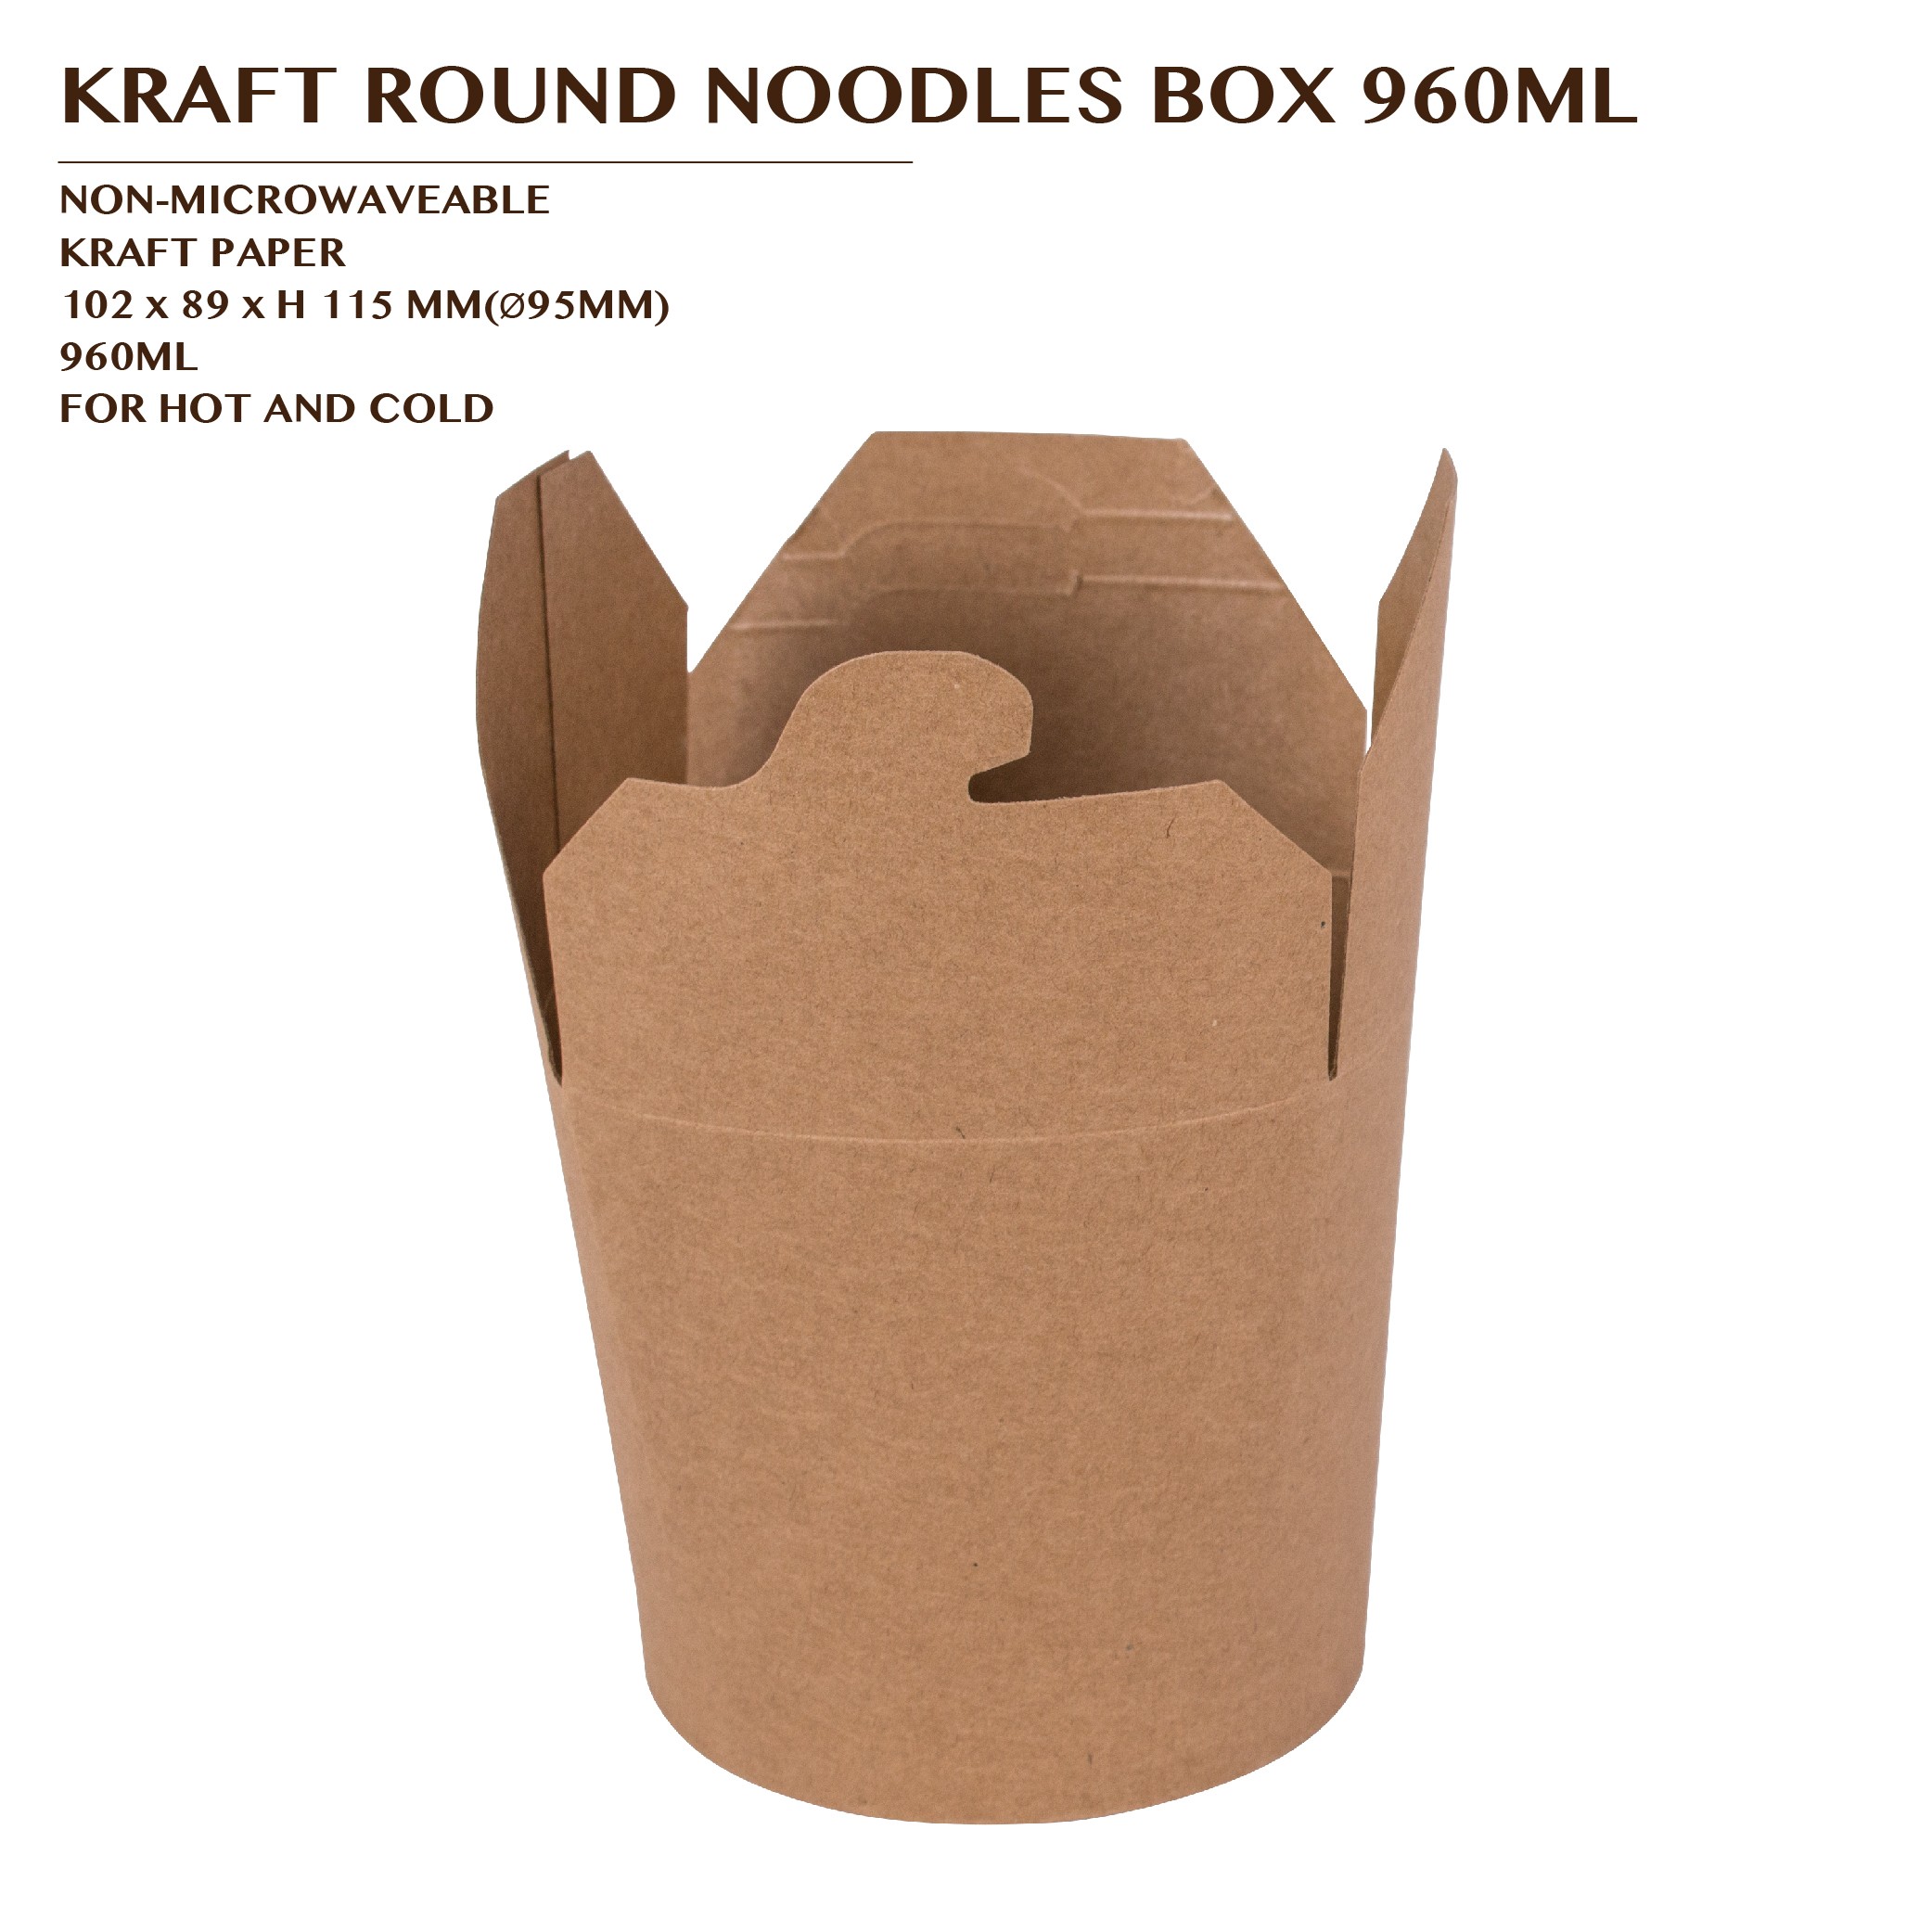 PRE-ORDER KRAFT ROUND NOODLES BOX 960ML